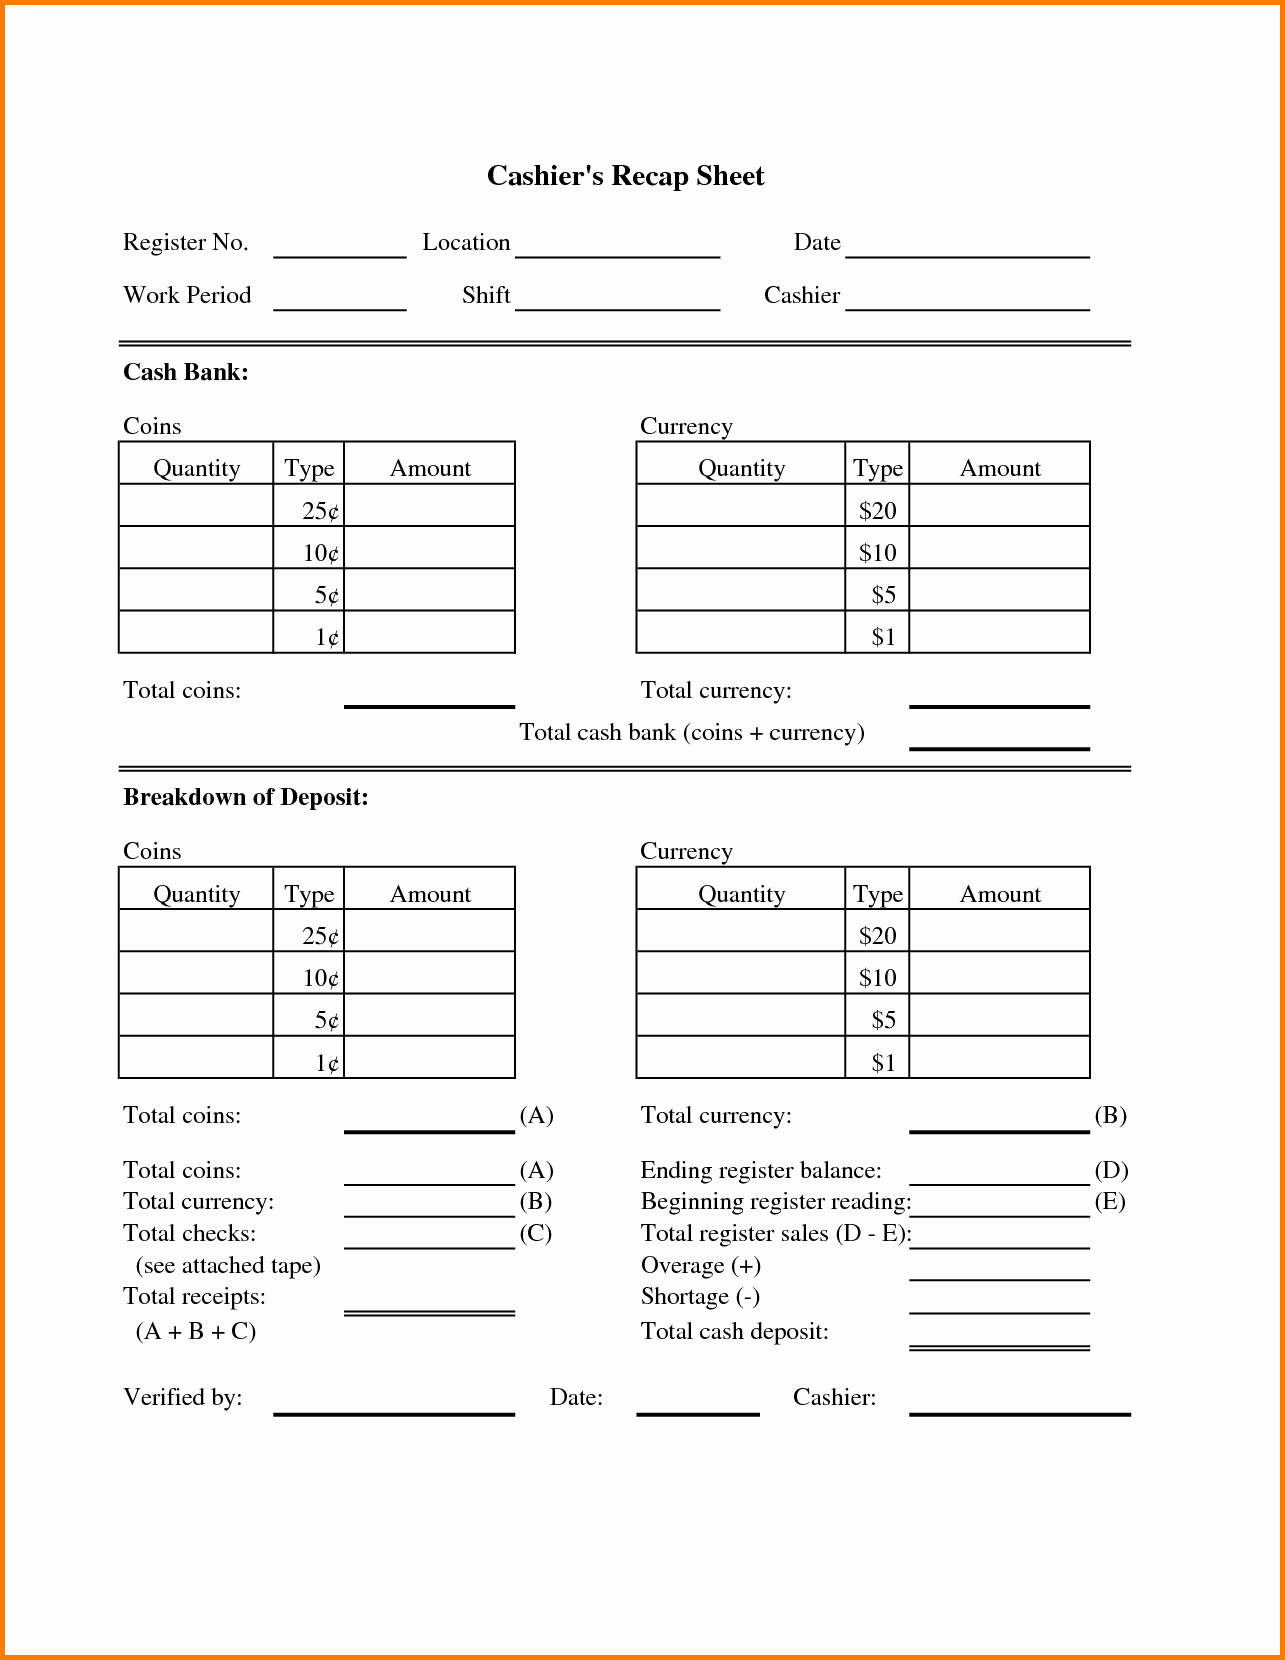 Cash Drawer Balance Sheet Template Luxury Cash Drawer Balance Sheet